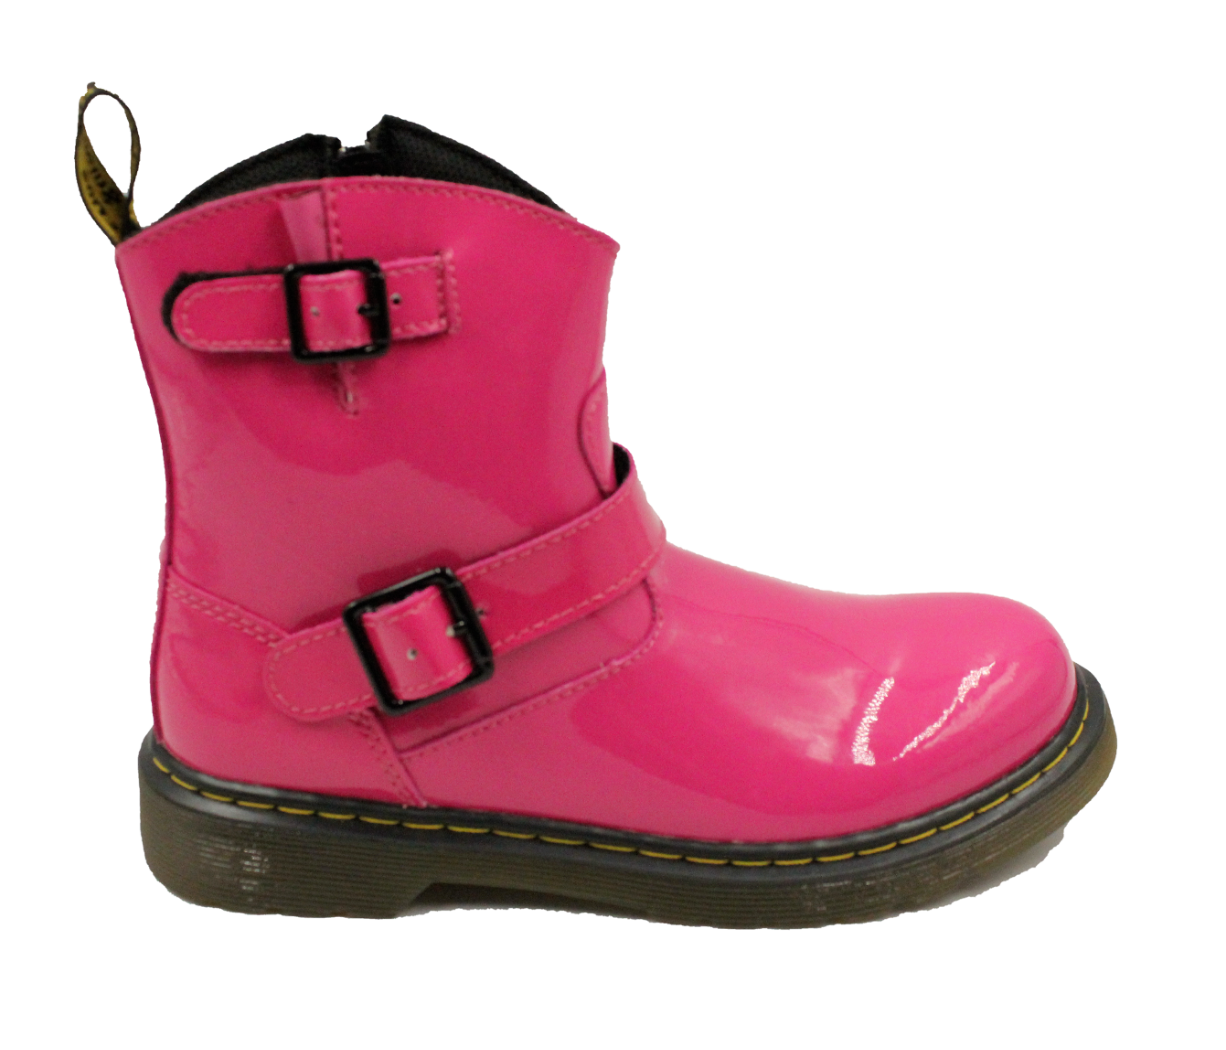 DR. MARTENS Blip AirWair Girls Combat Patent Lamper Boot Hot Pink Size 3 NEW